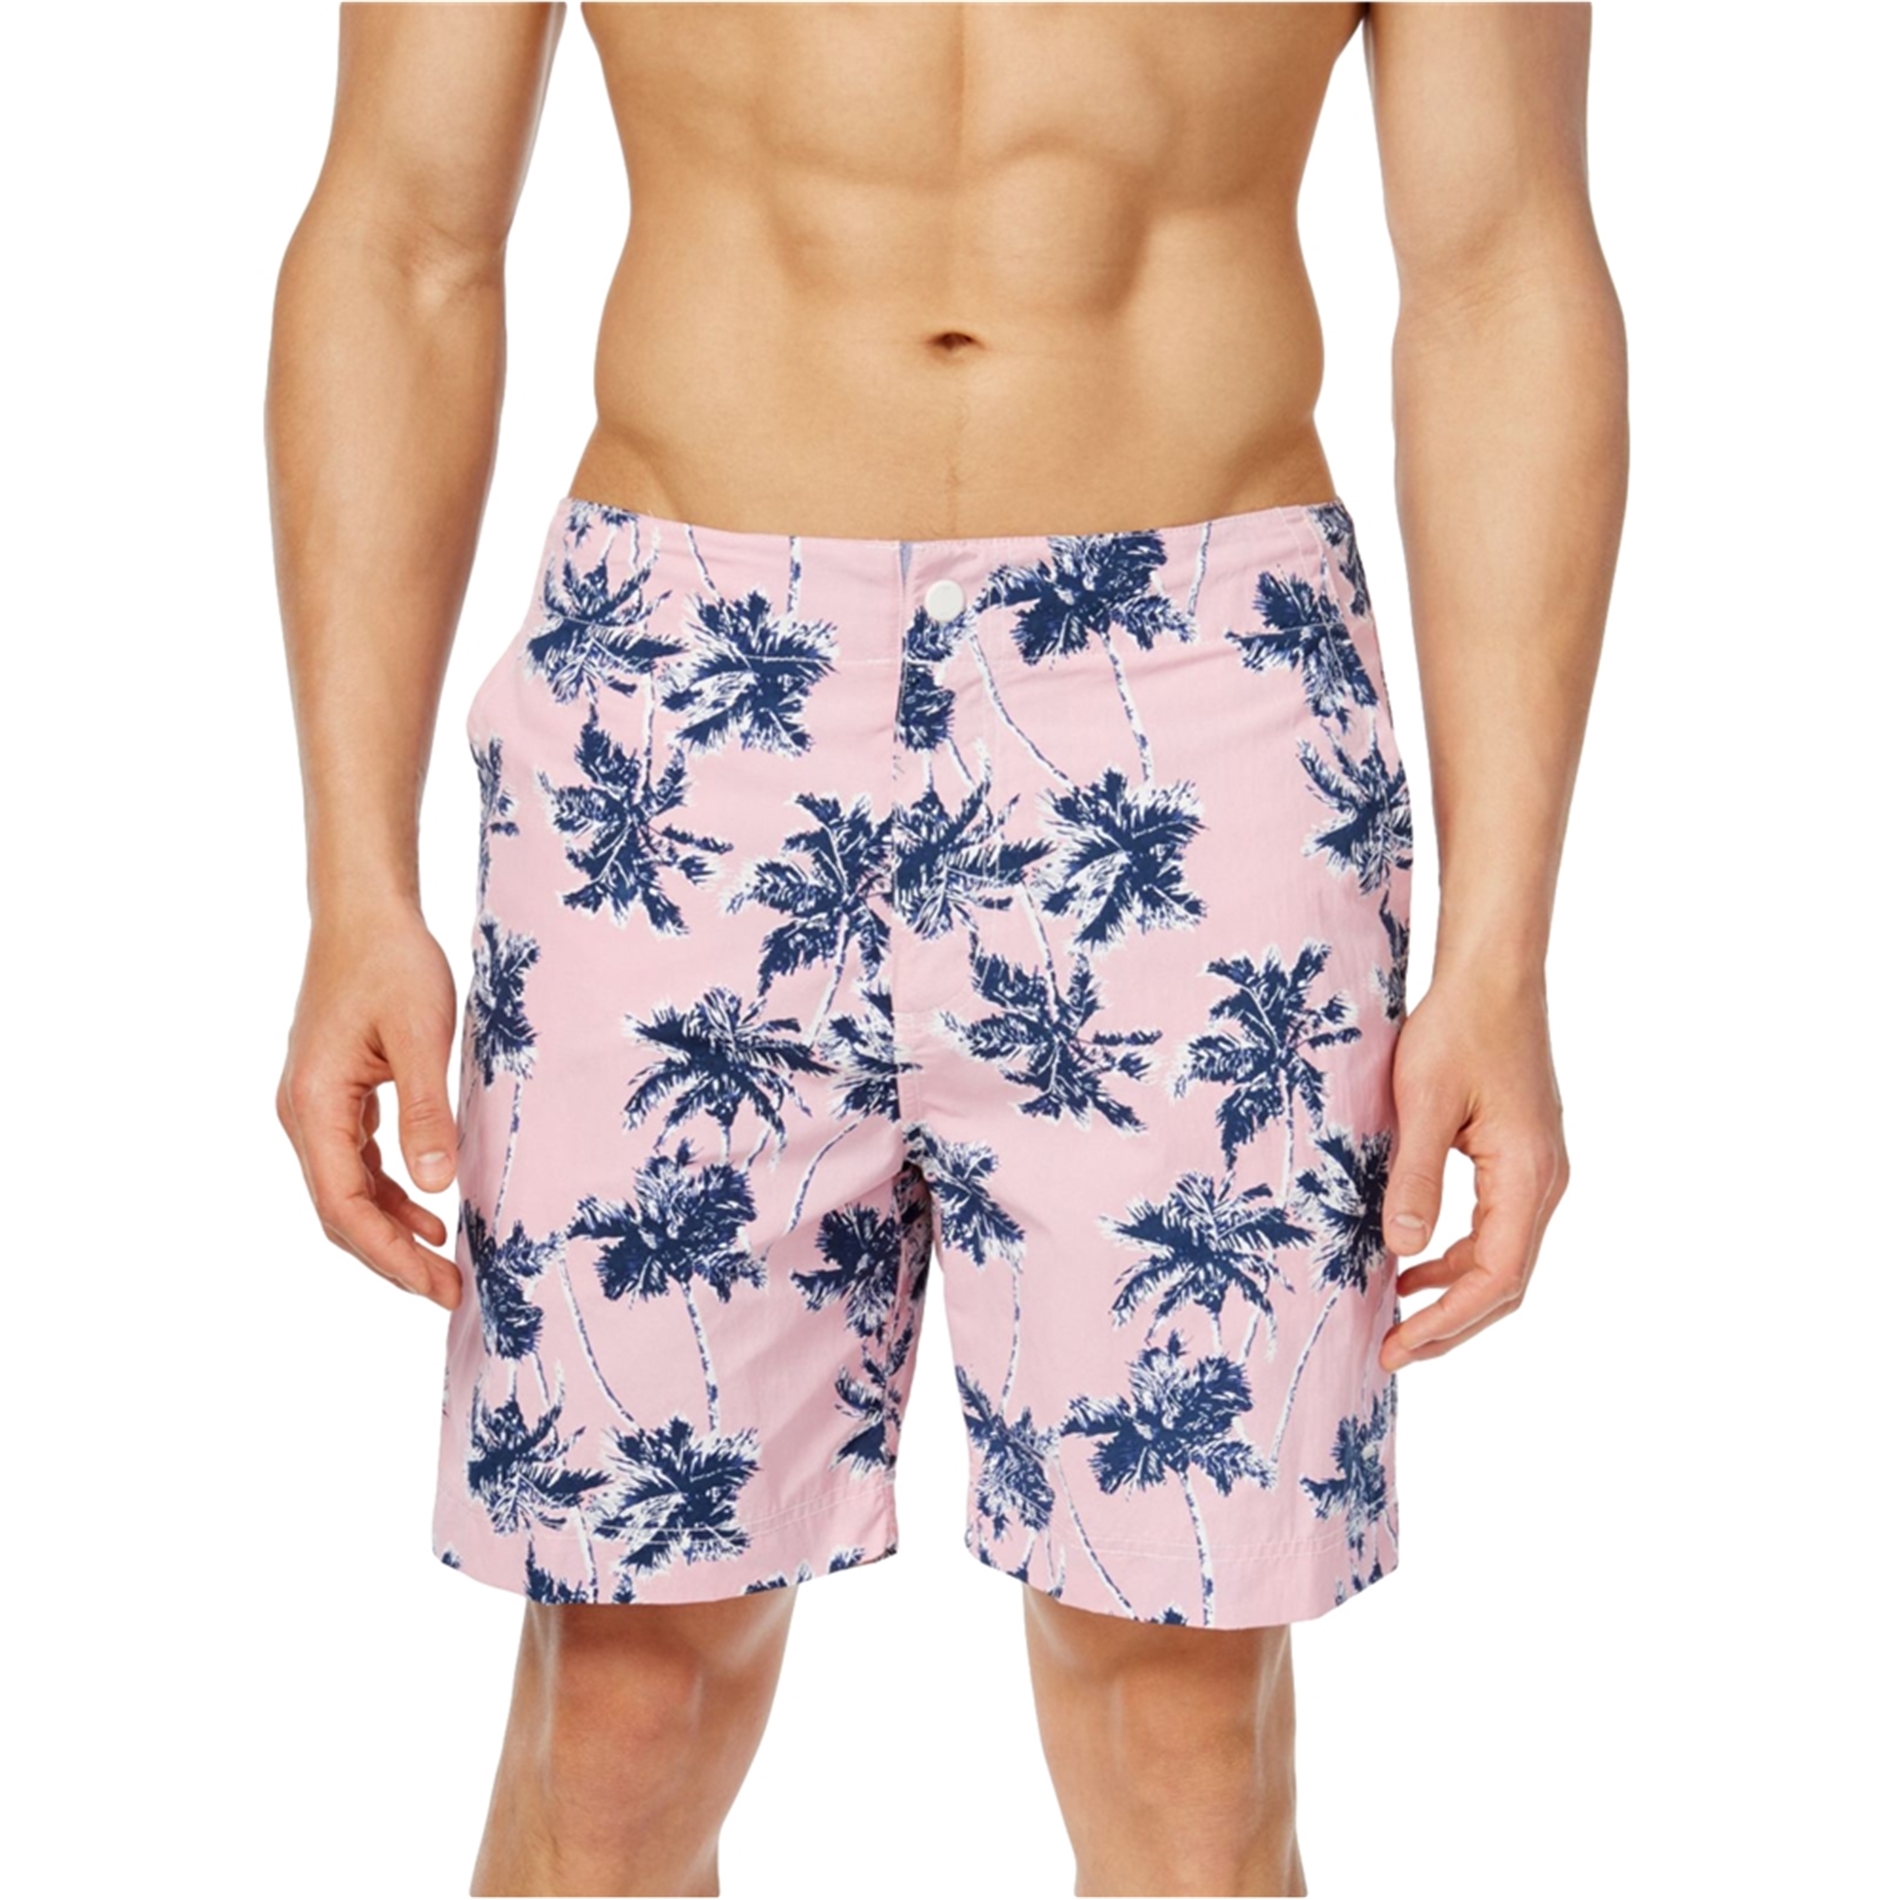 Tommy Hilfiger Mens Regal Palms Swim Bottom Board Shorts